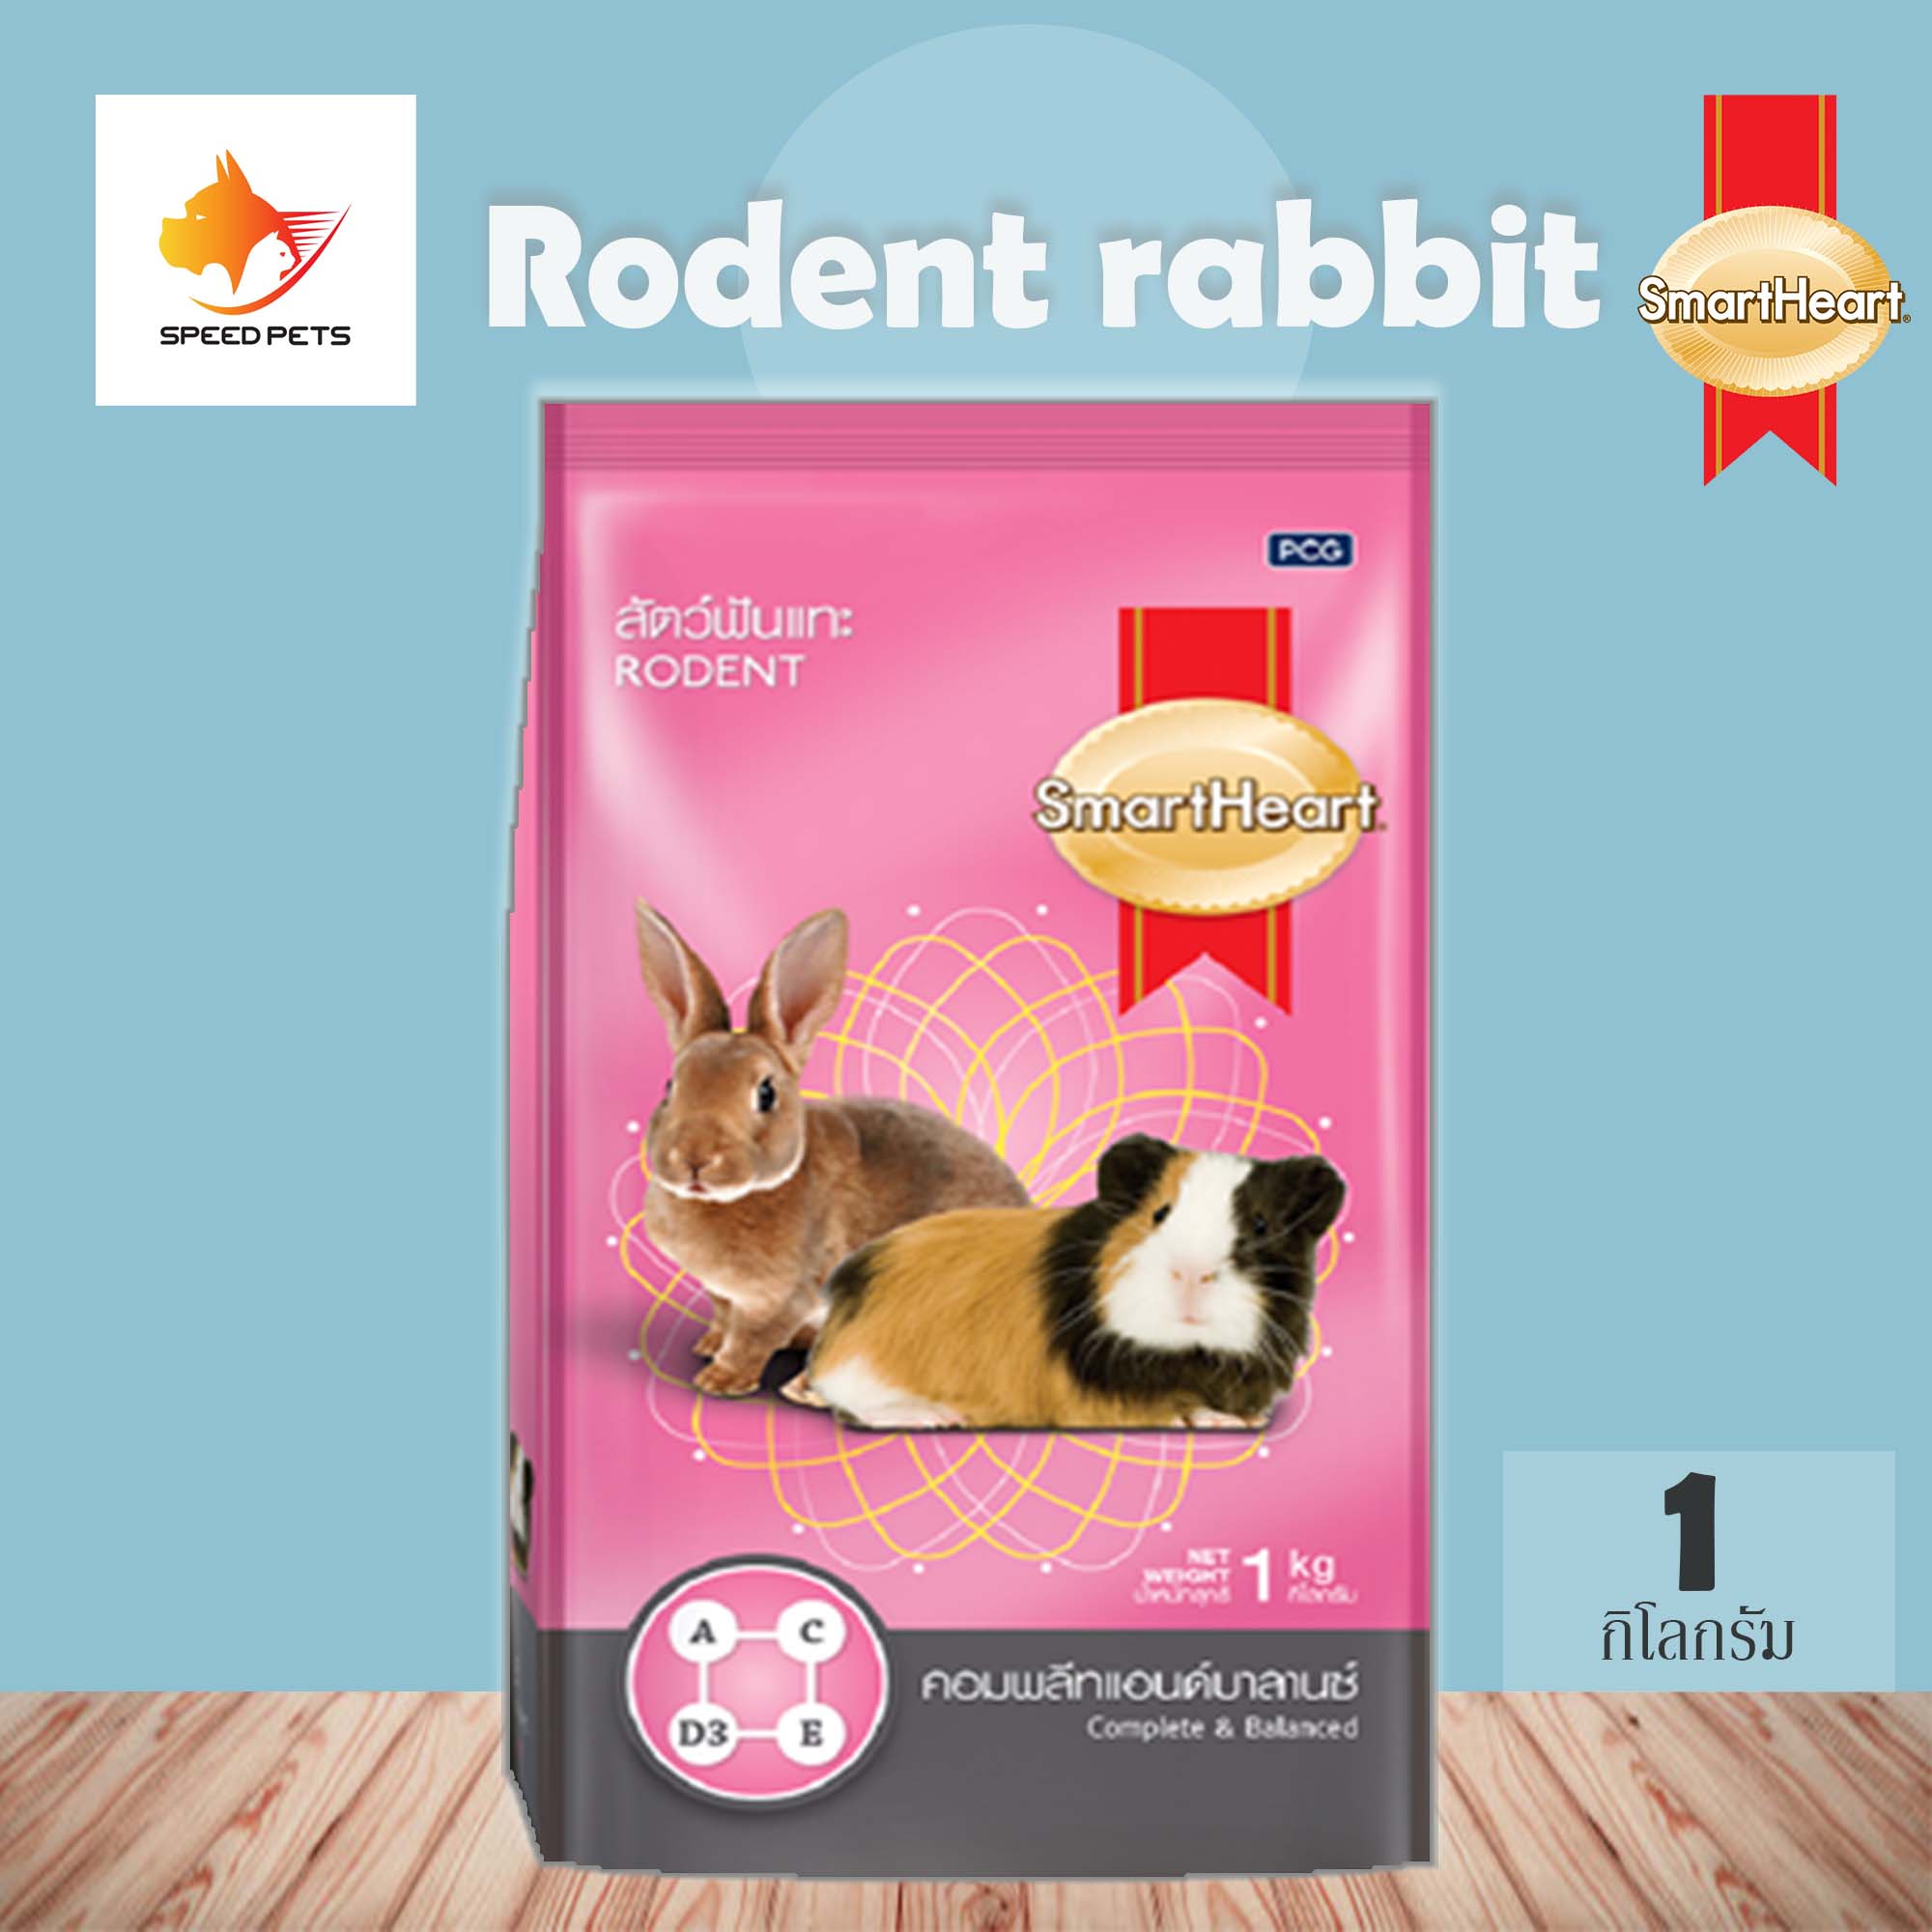 Smartheart rodent rabbit 1 kg สมาร์ทฮาร์ท อาหารสัตว์ฟันแทะ แบบแท่ง กระต่าย หนู  1 กก.